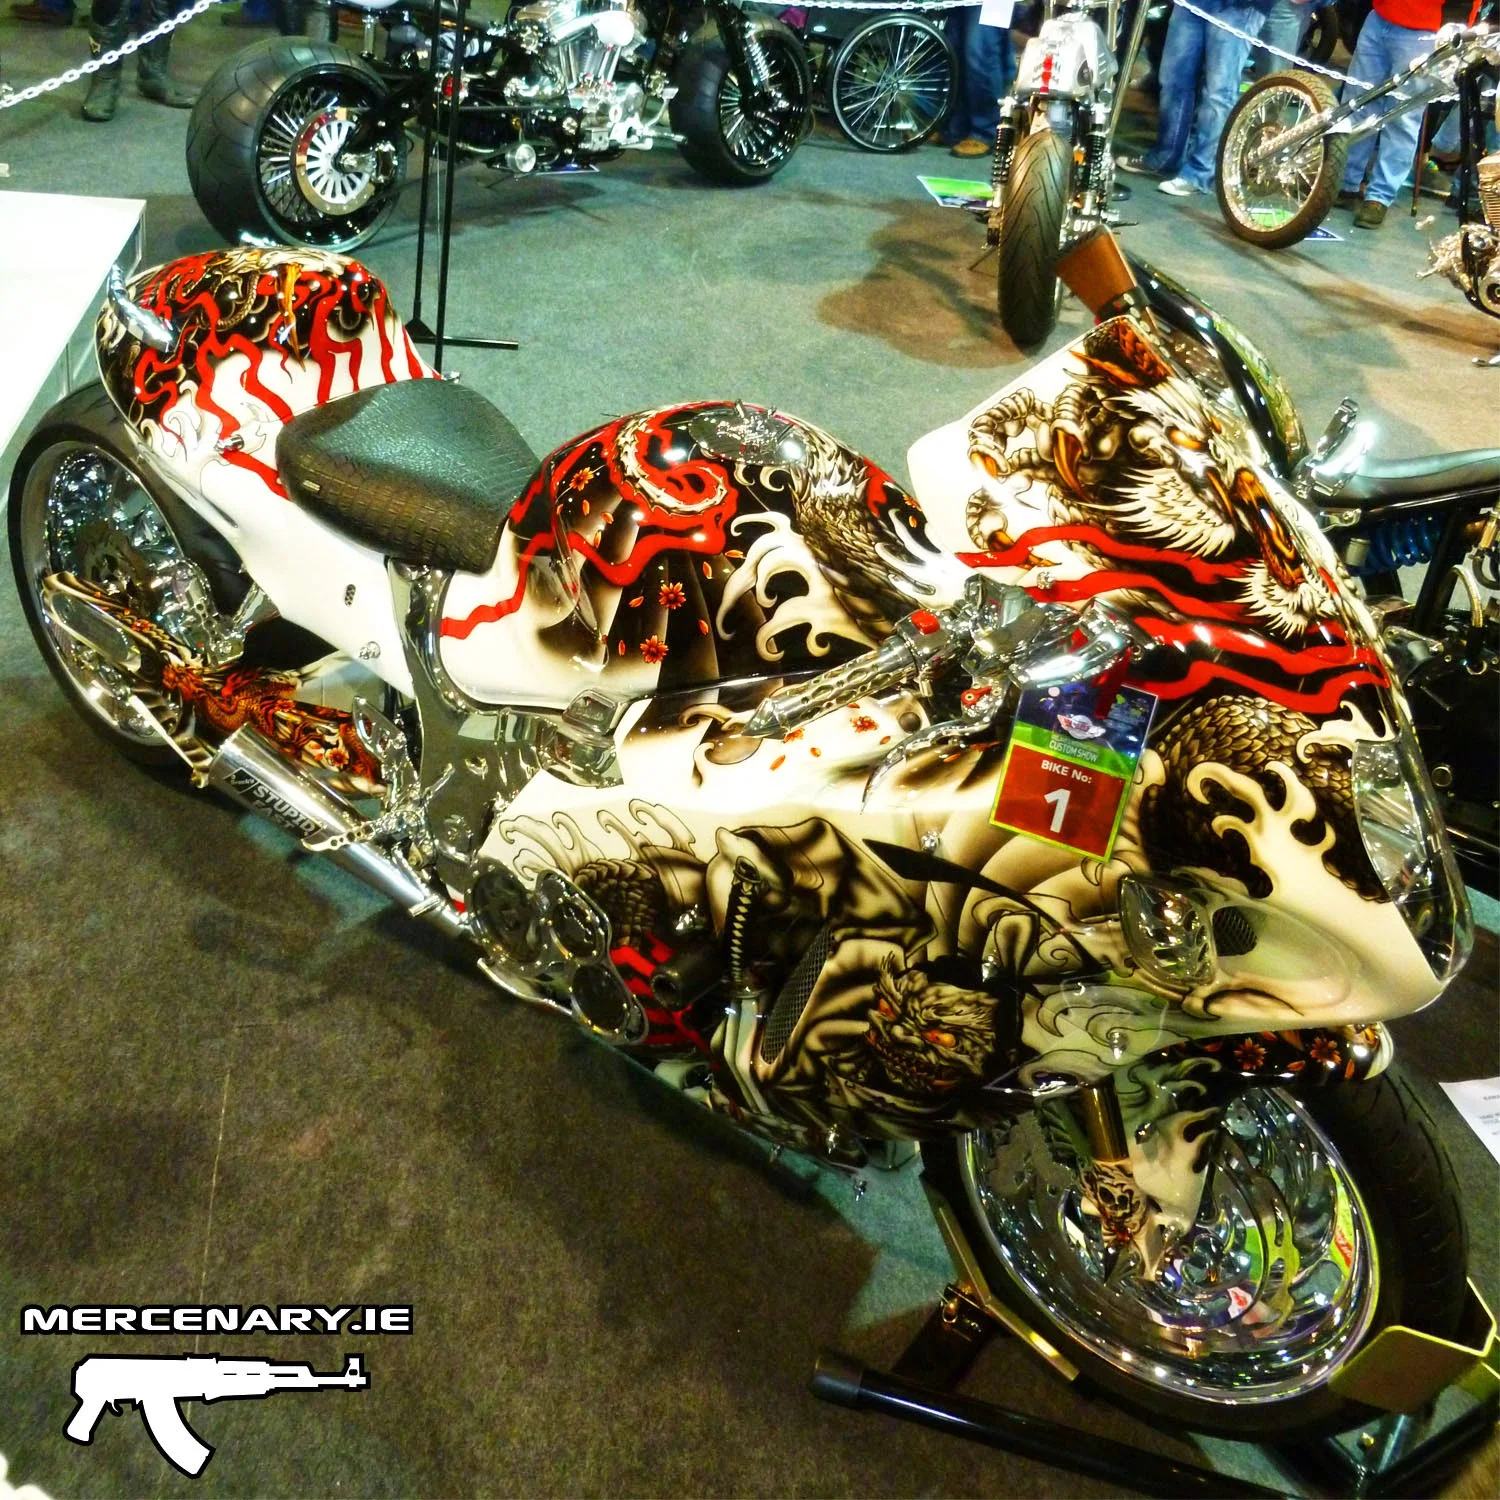 Mercenary Garage - Custom Bike, SciFi & Punk Engineering Blog: February 2015